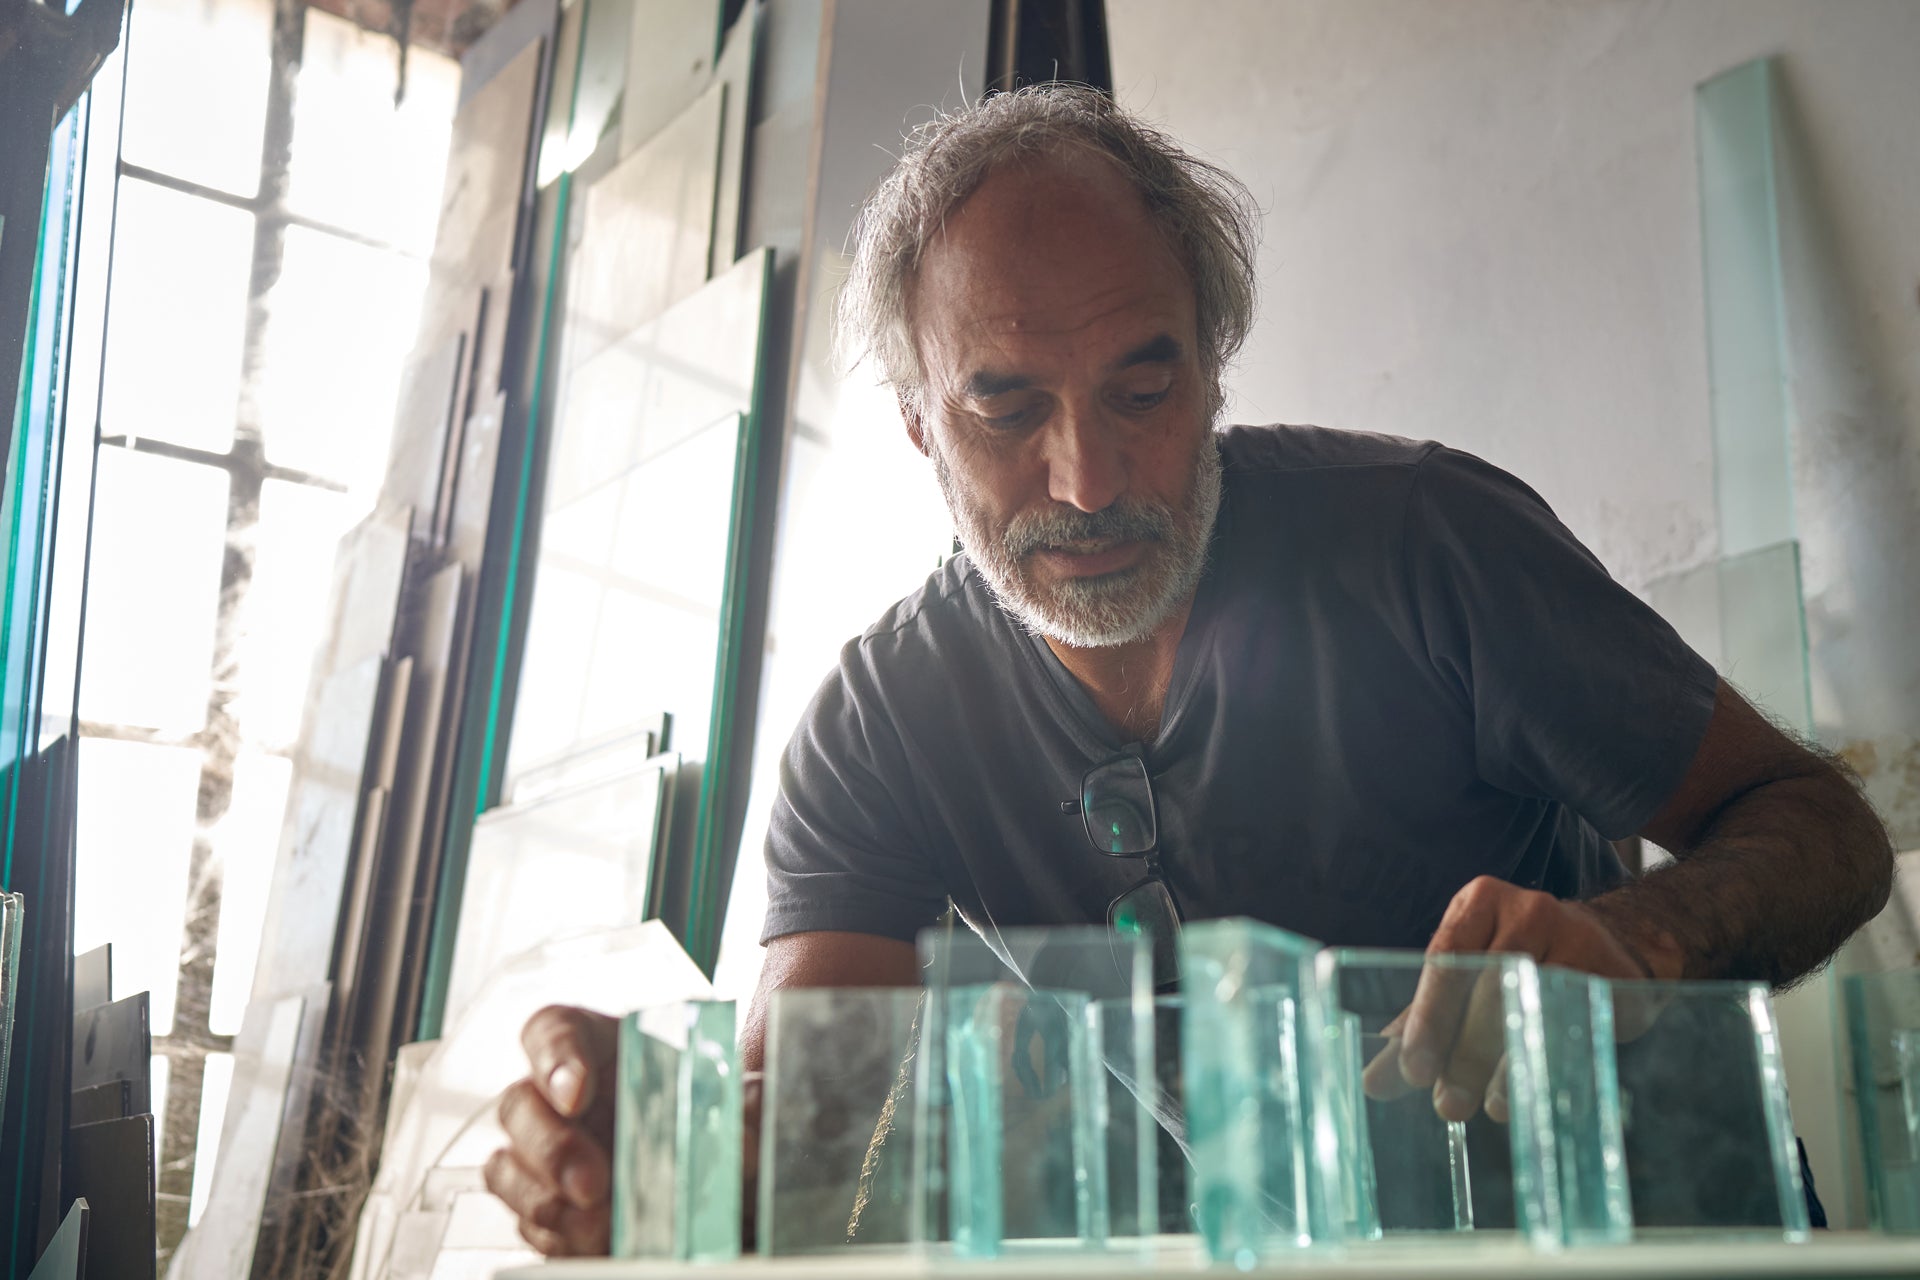 Glass hobbyist prepares glass panels for fusing